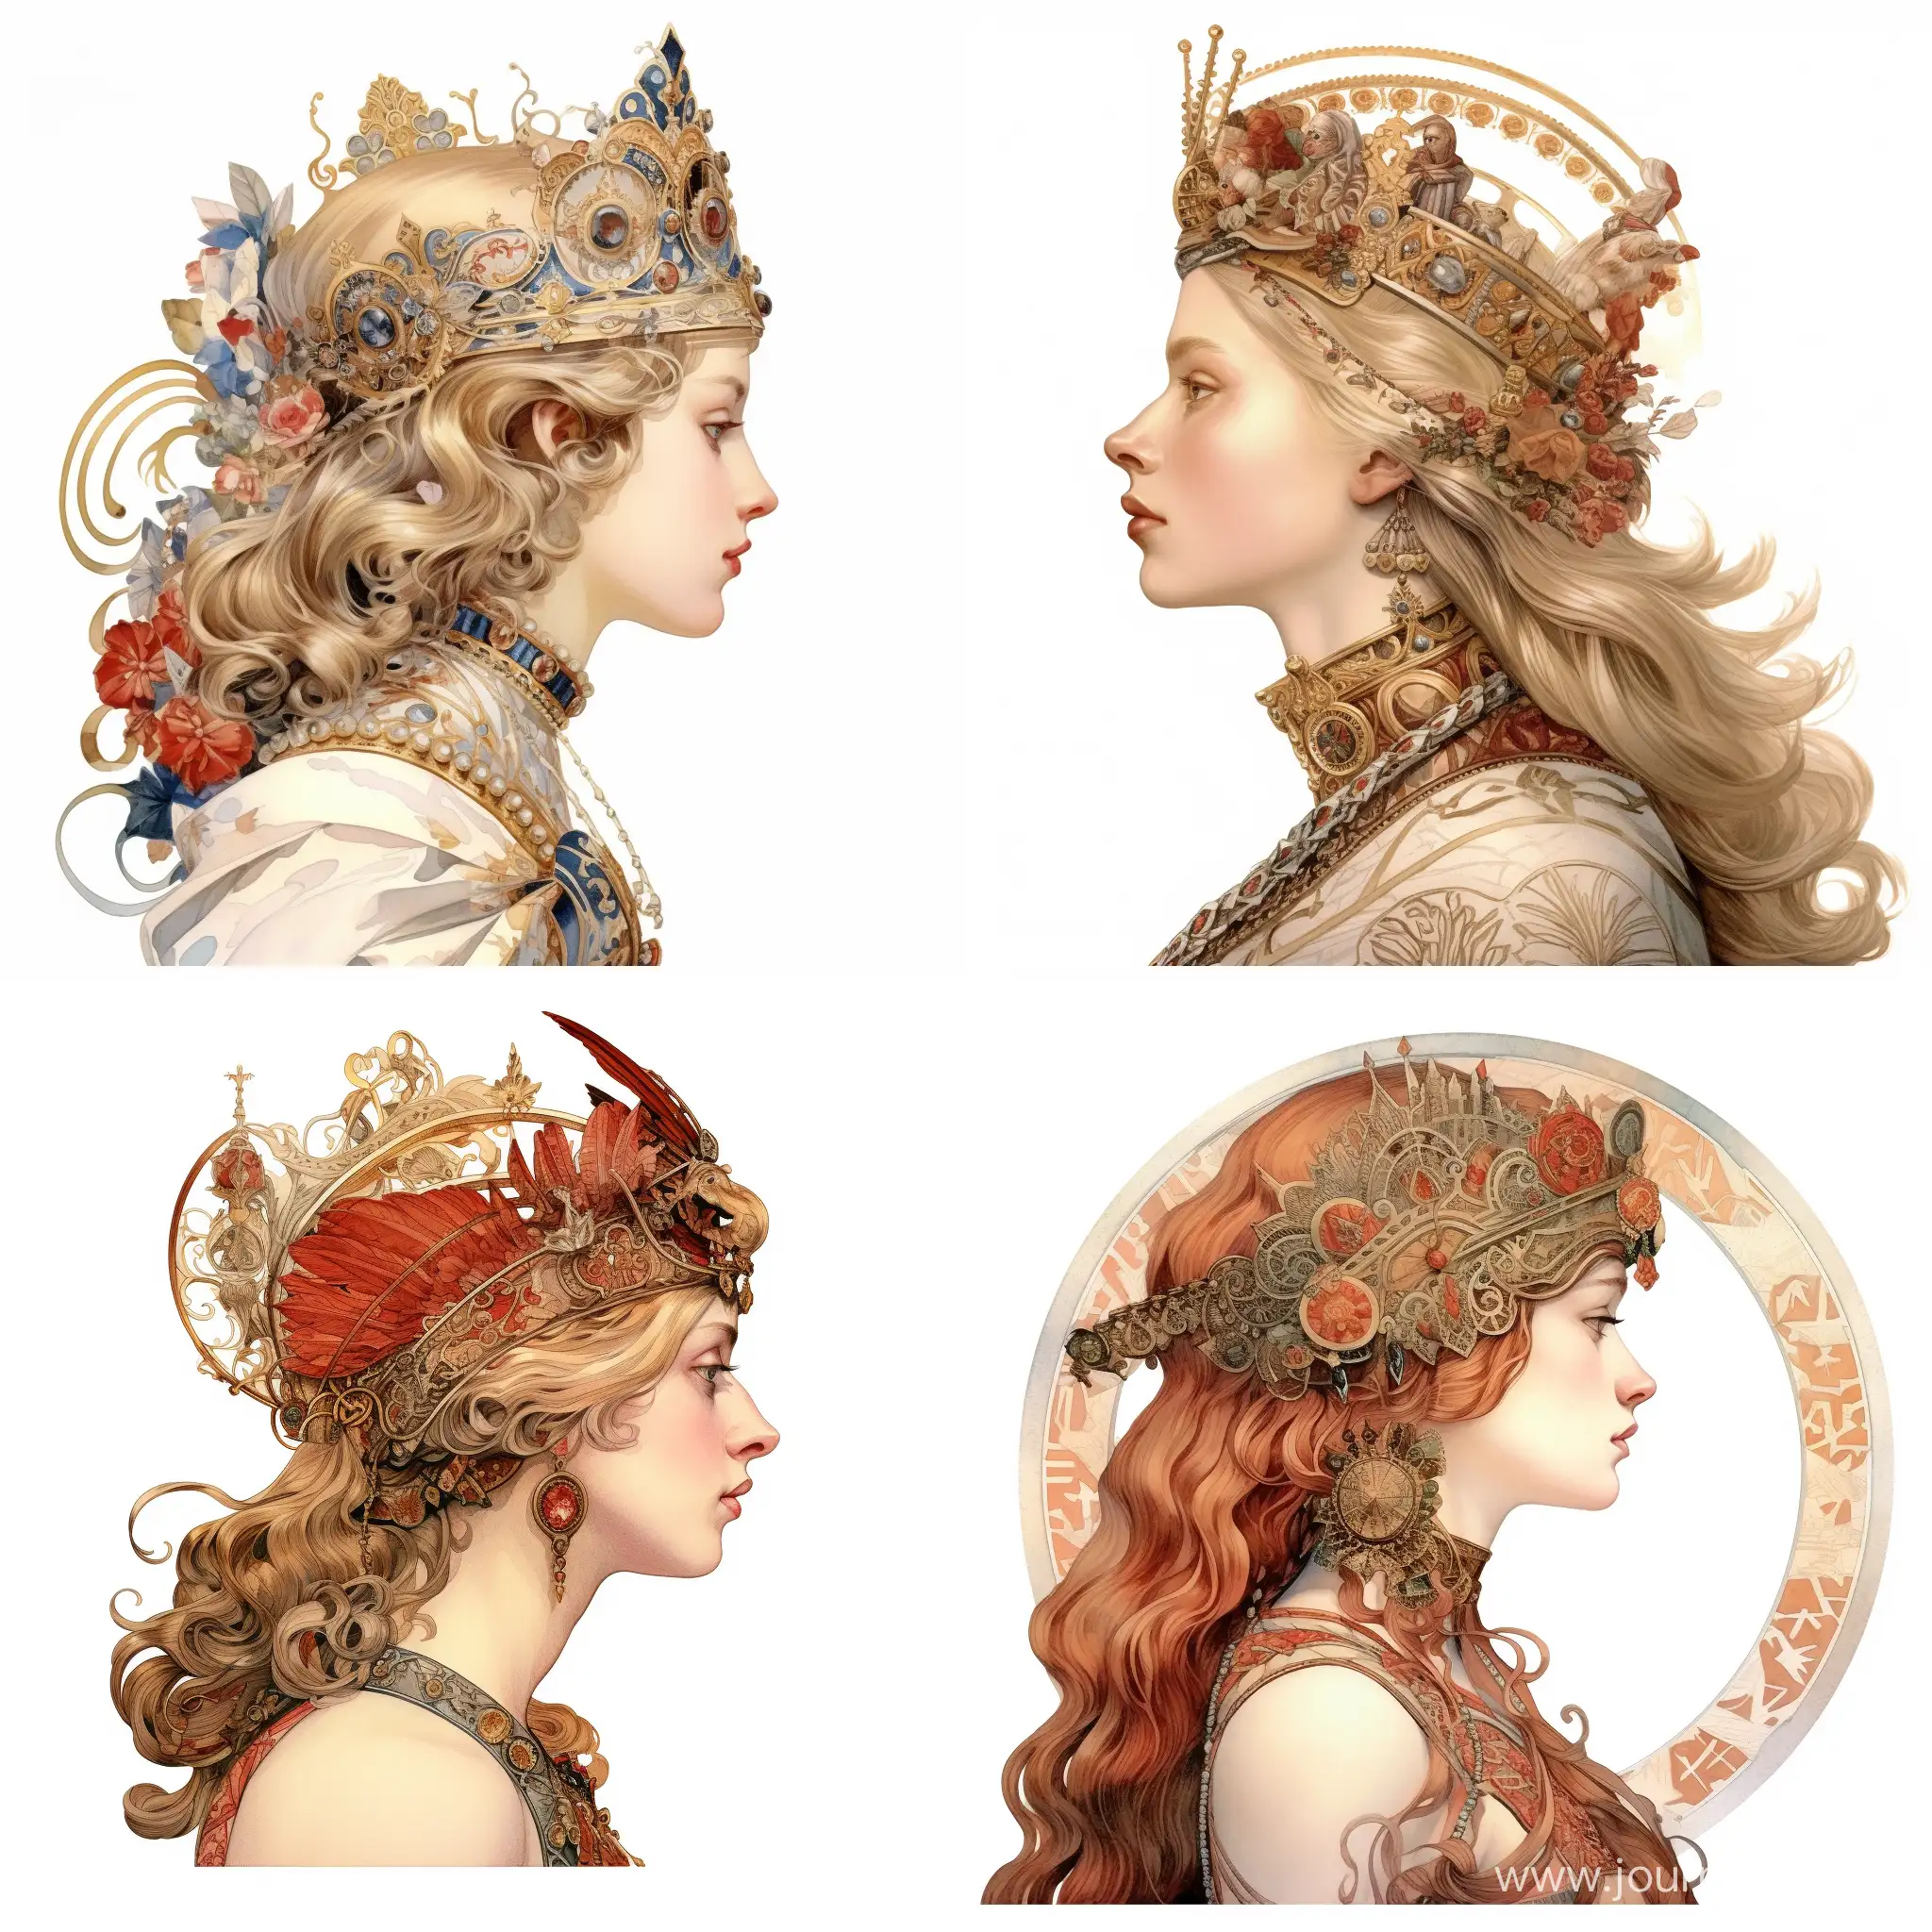 Regal-Portrait-Queen-in-Antique-Royal-Attire-with-Crown